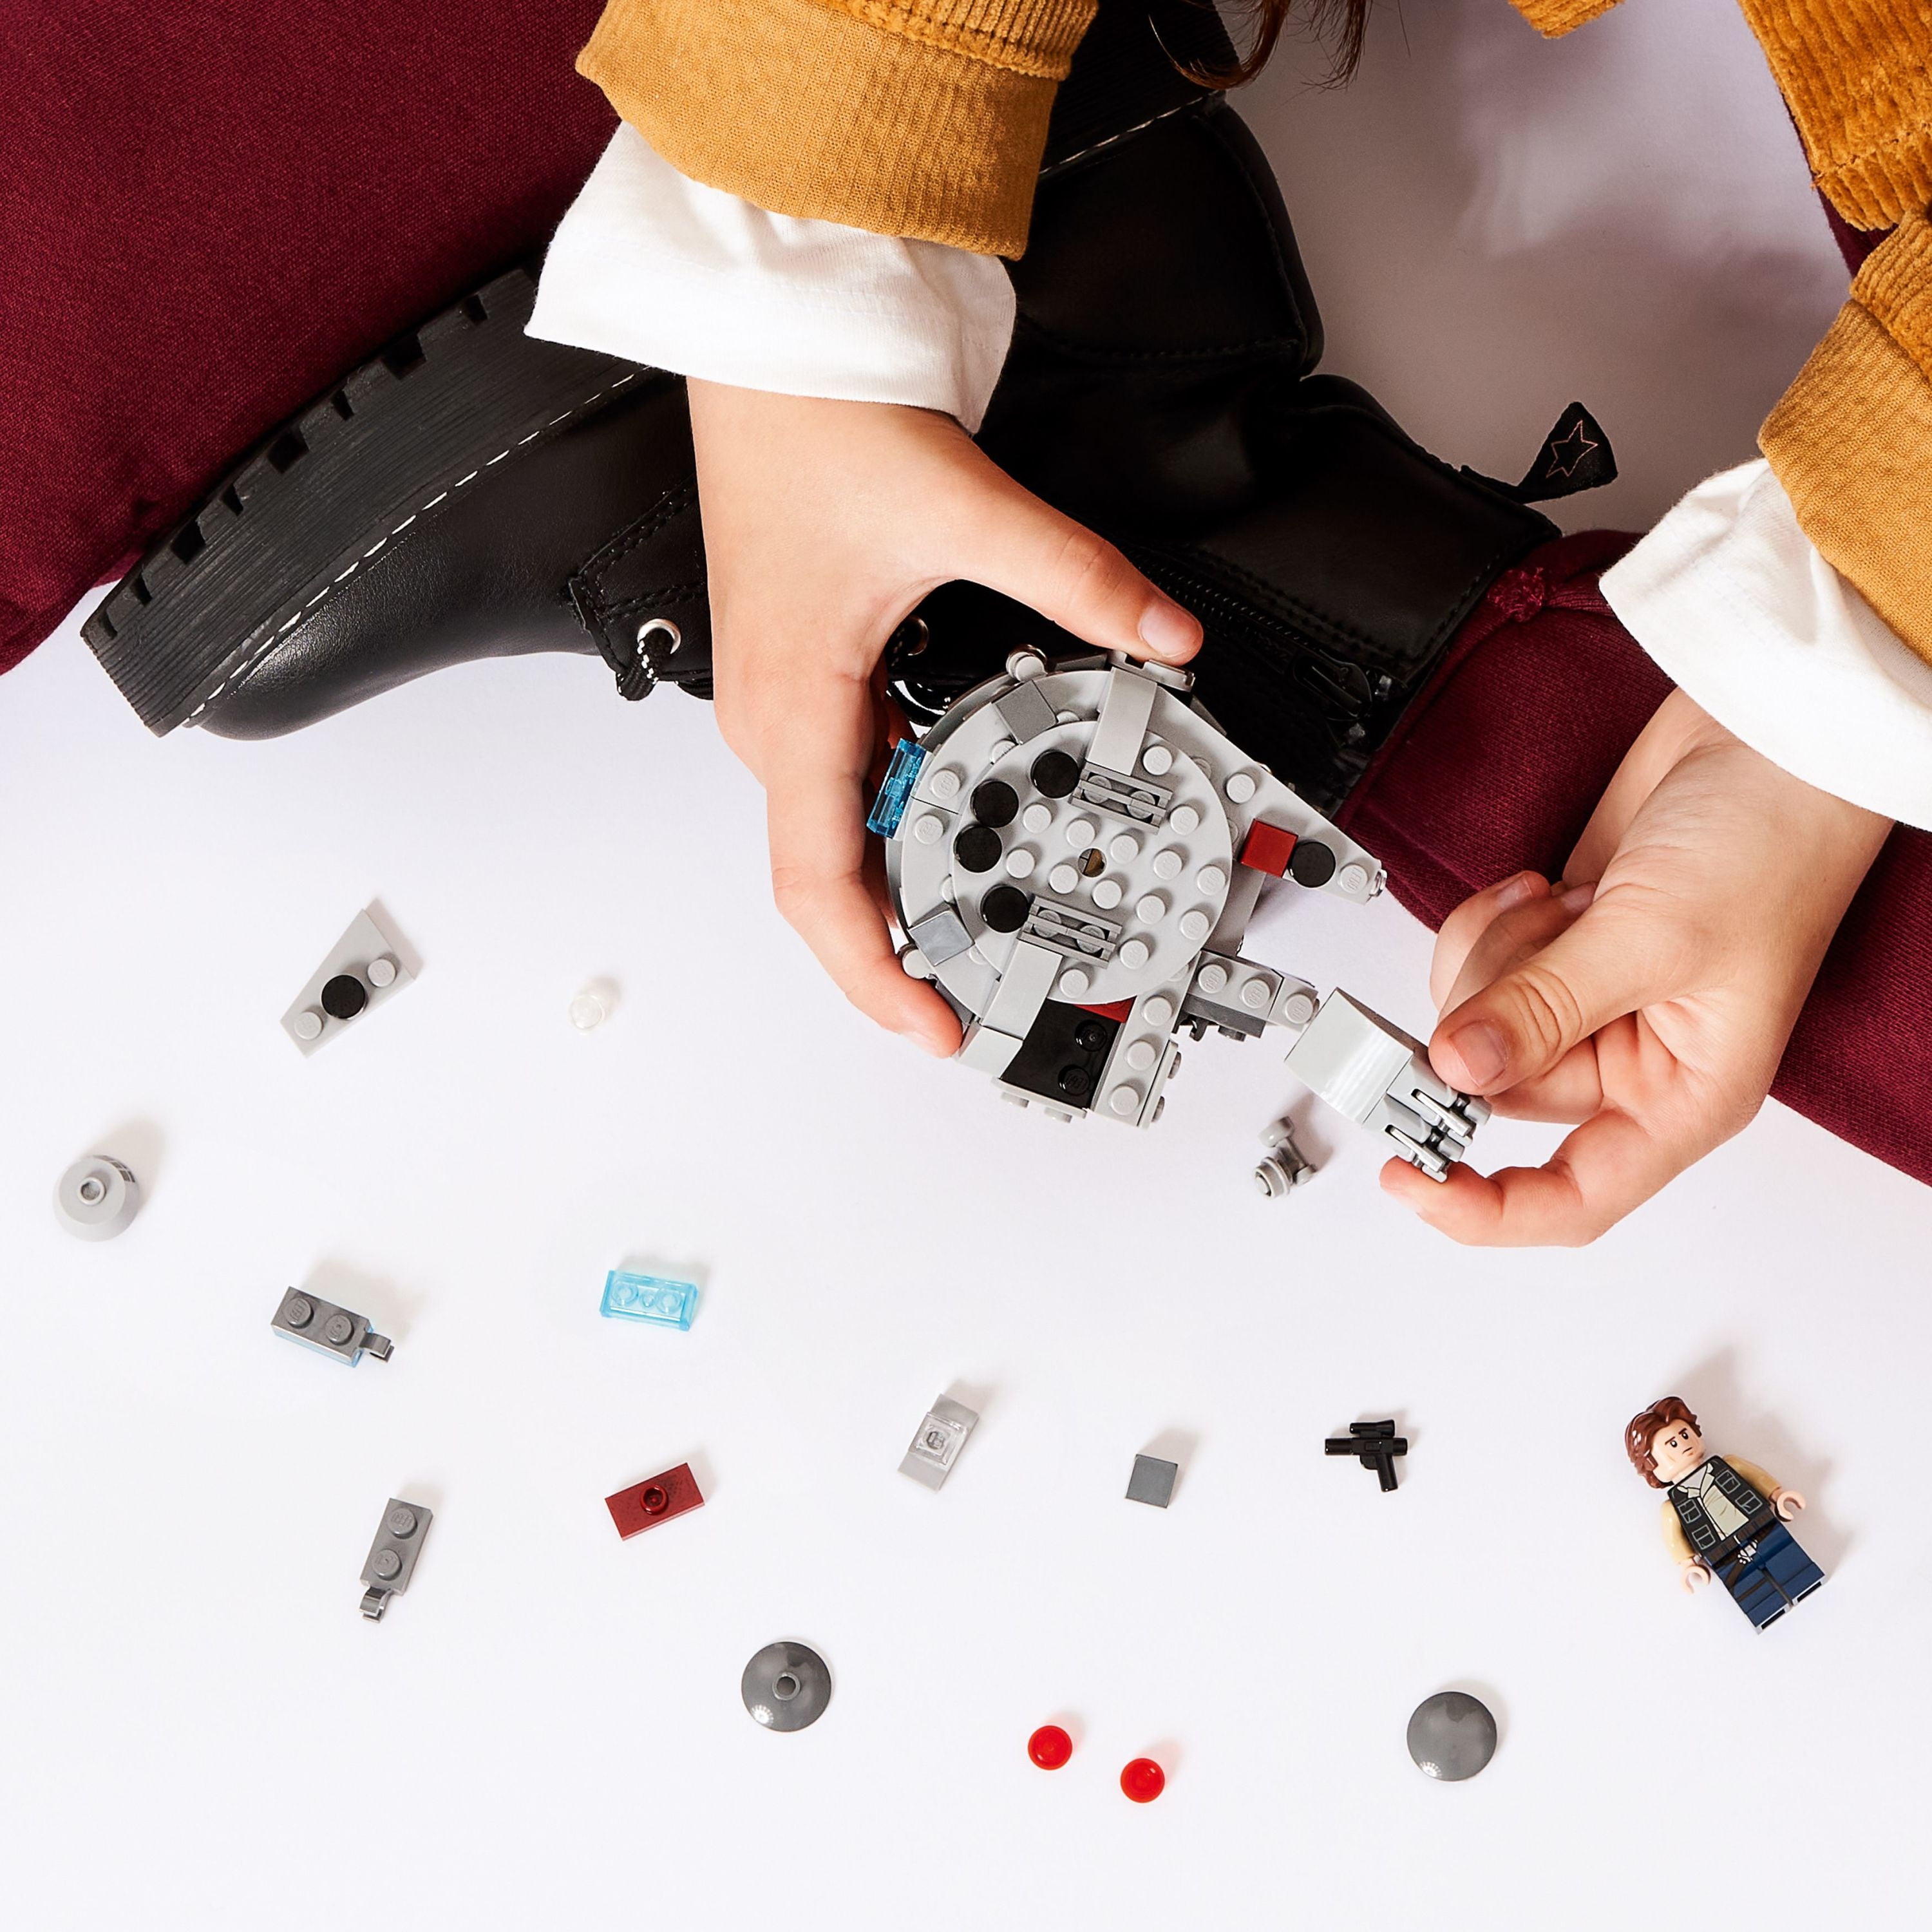 LEGO® Star Wars Millennium Falcon Microfighter, 101 pc - Jay C